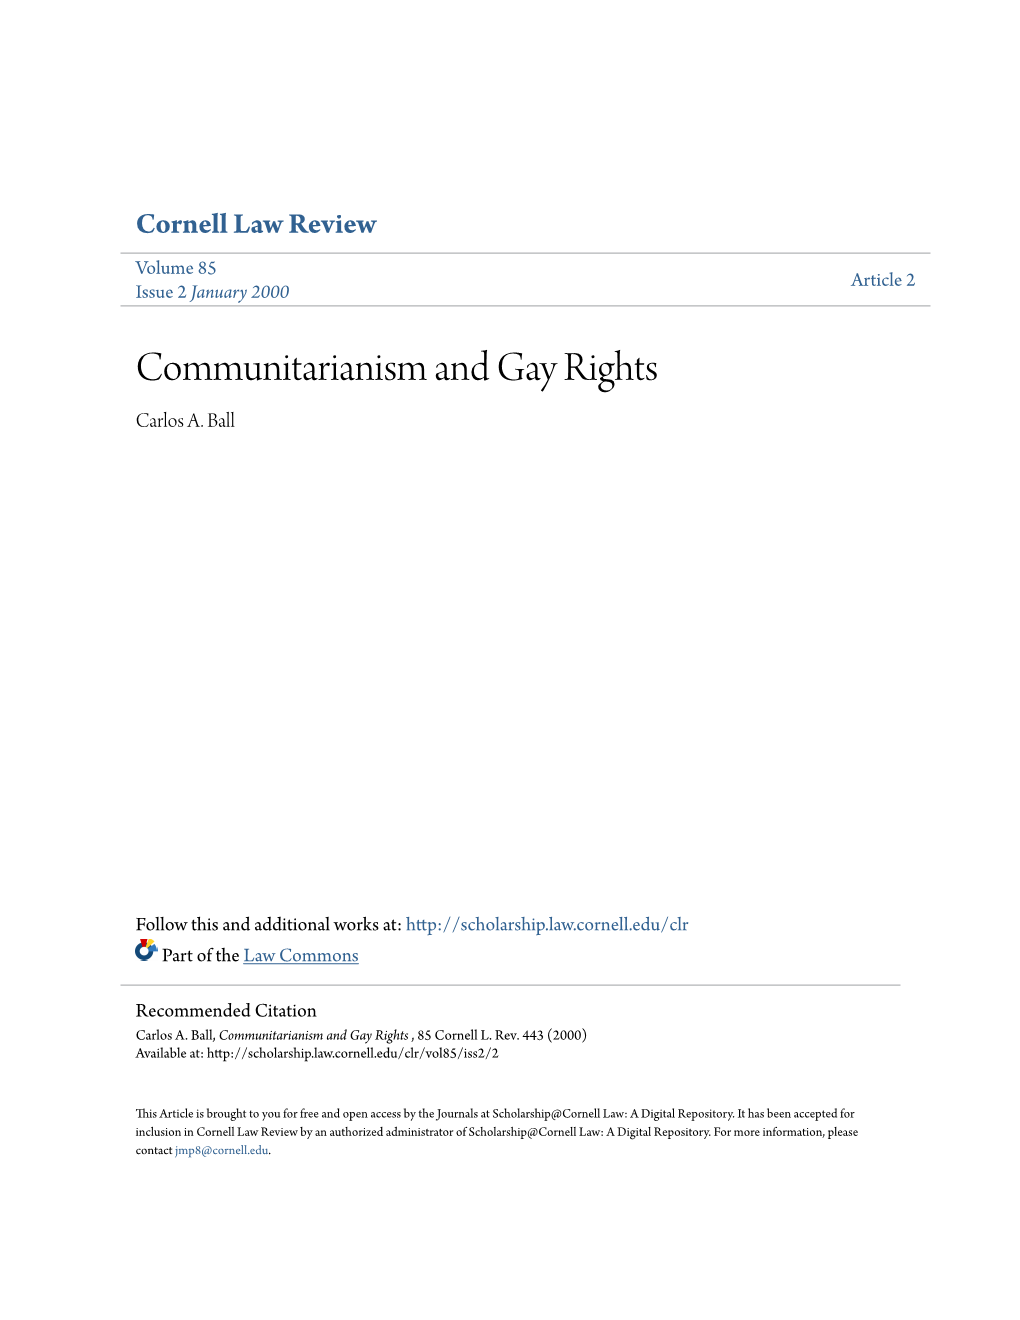 Communitarianism and Gay Rights Carlos A